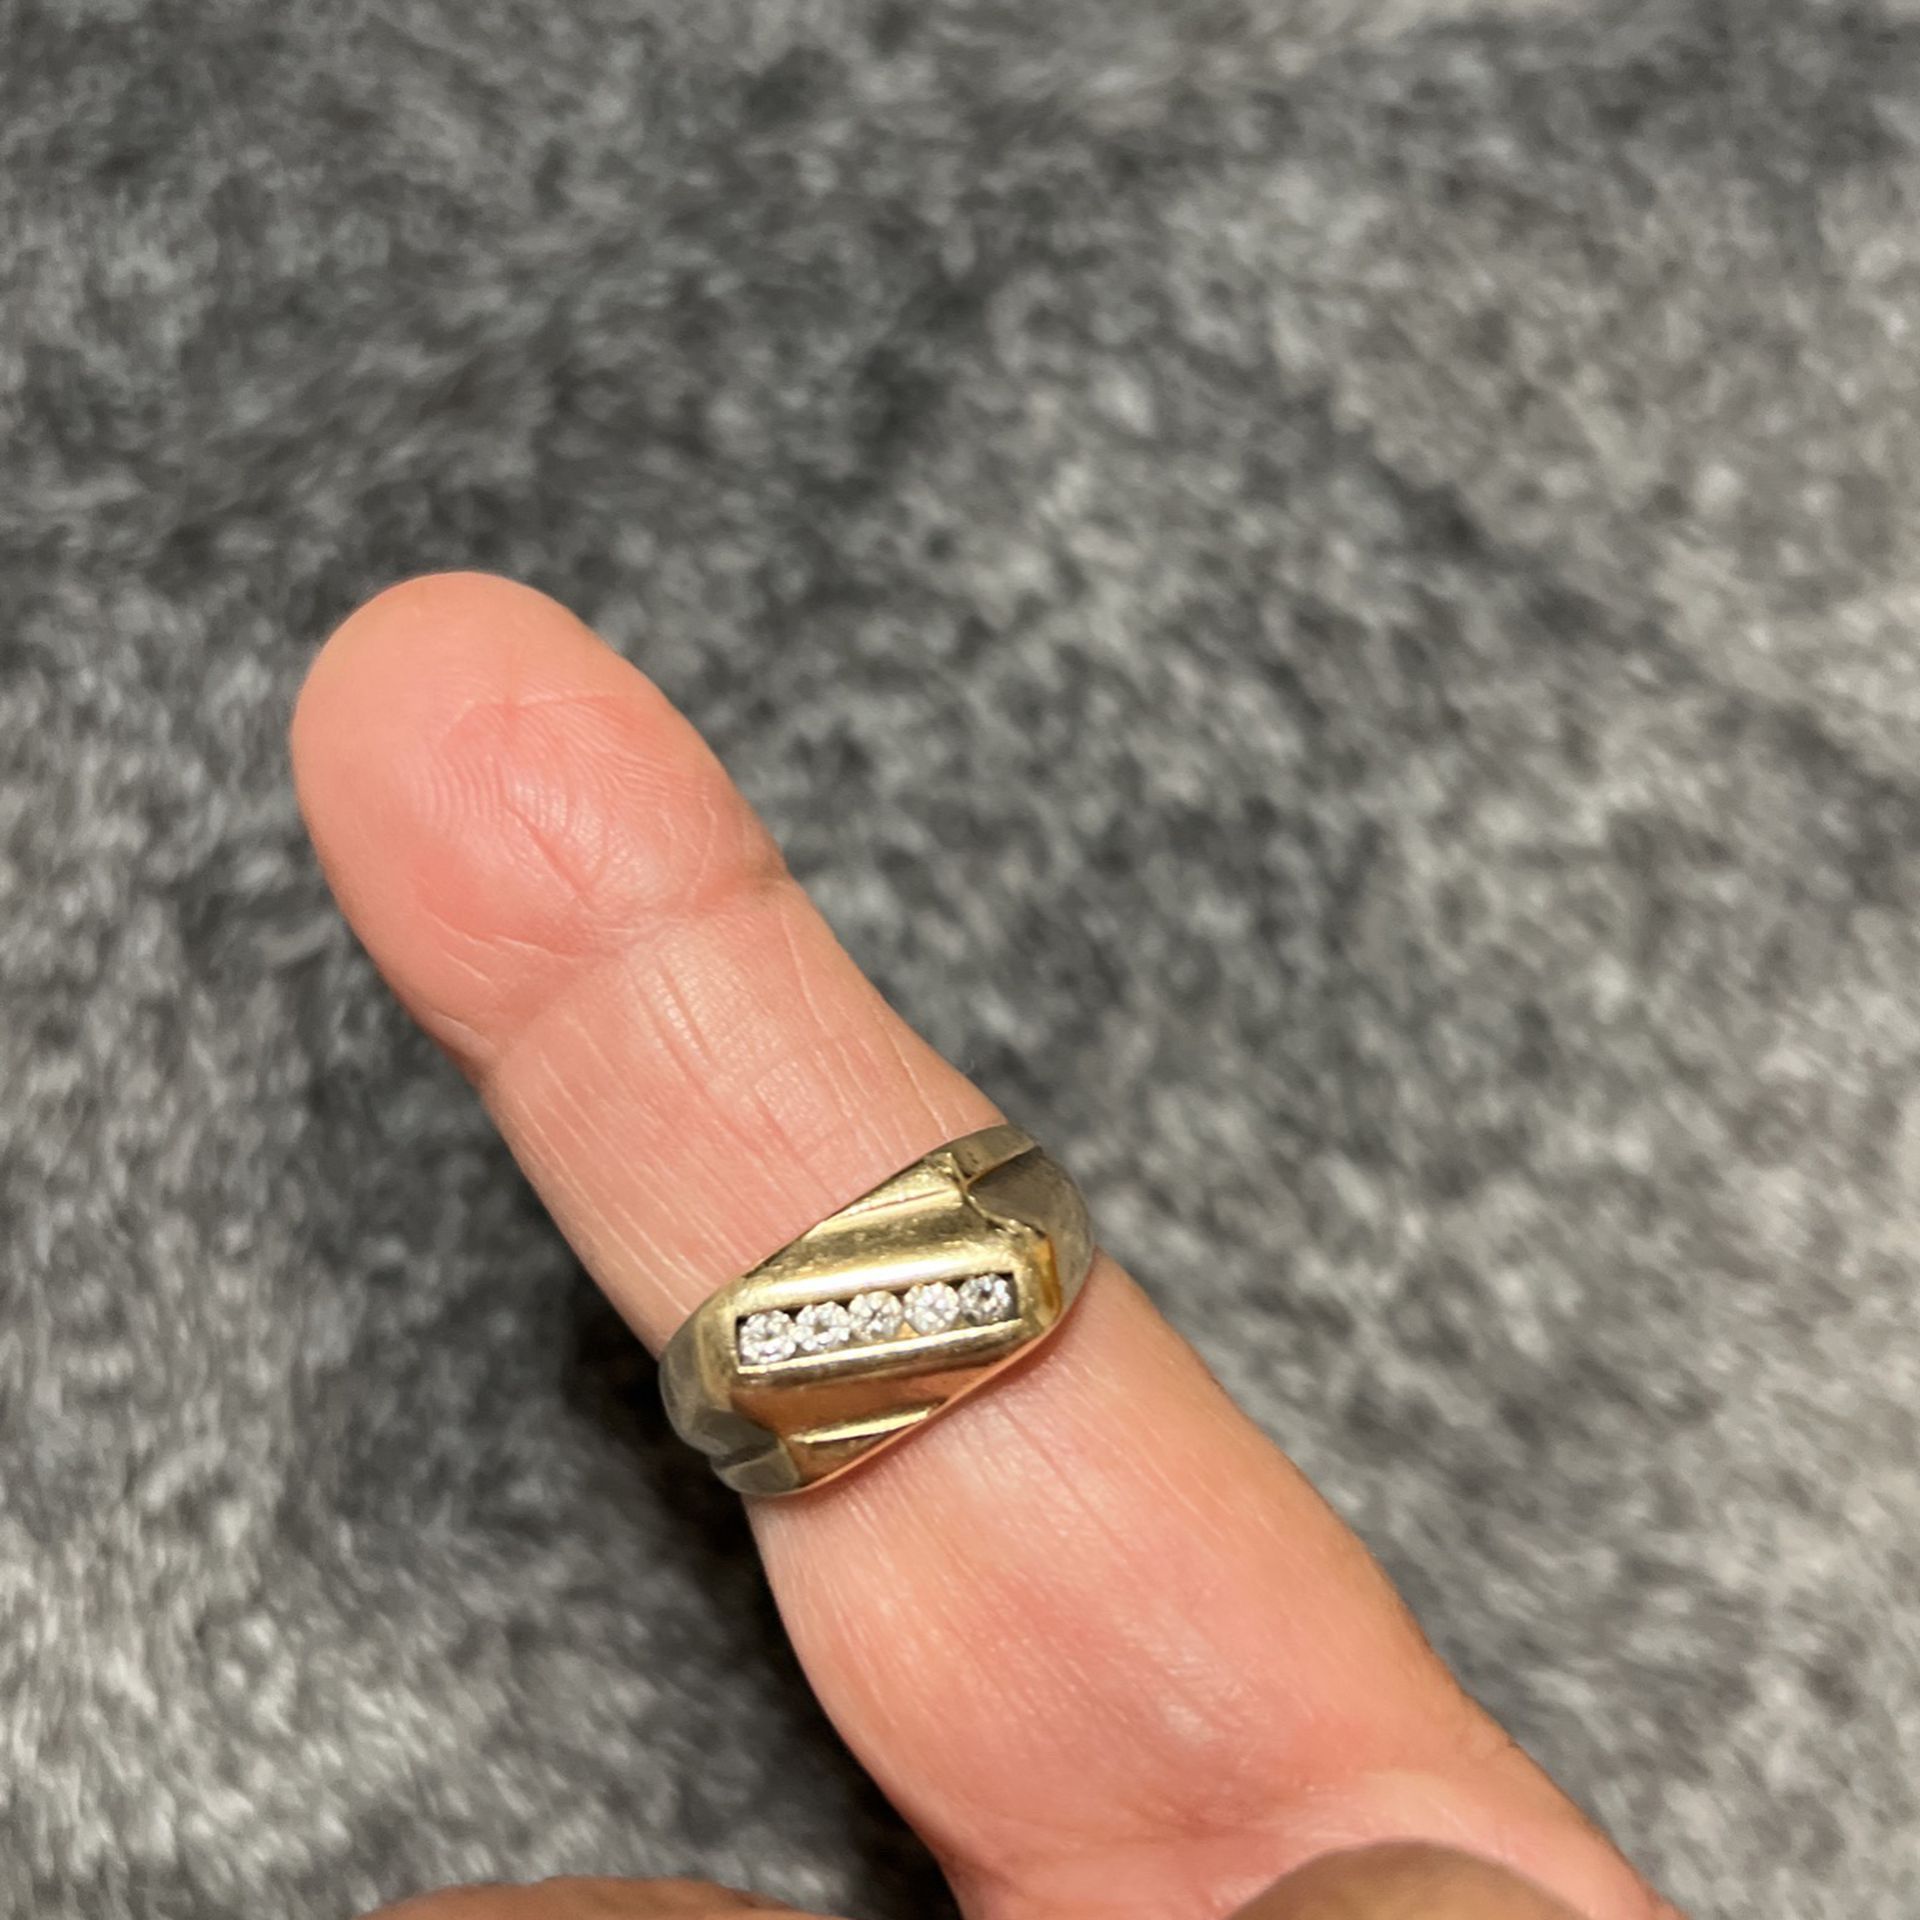 Solid Gold 10 Karat Men’s Ring With Five Diamonds $500